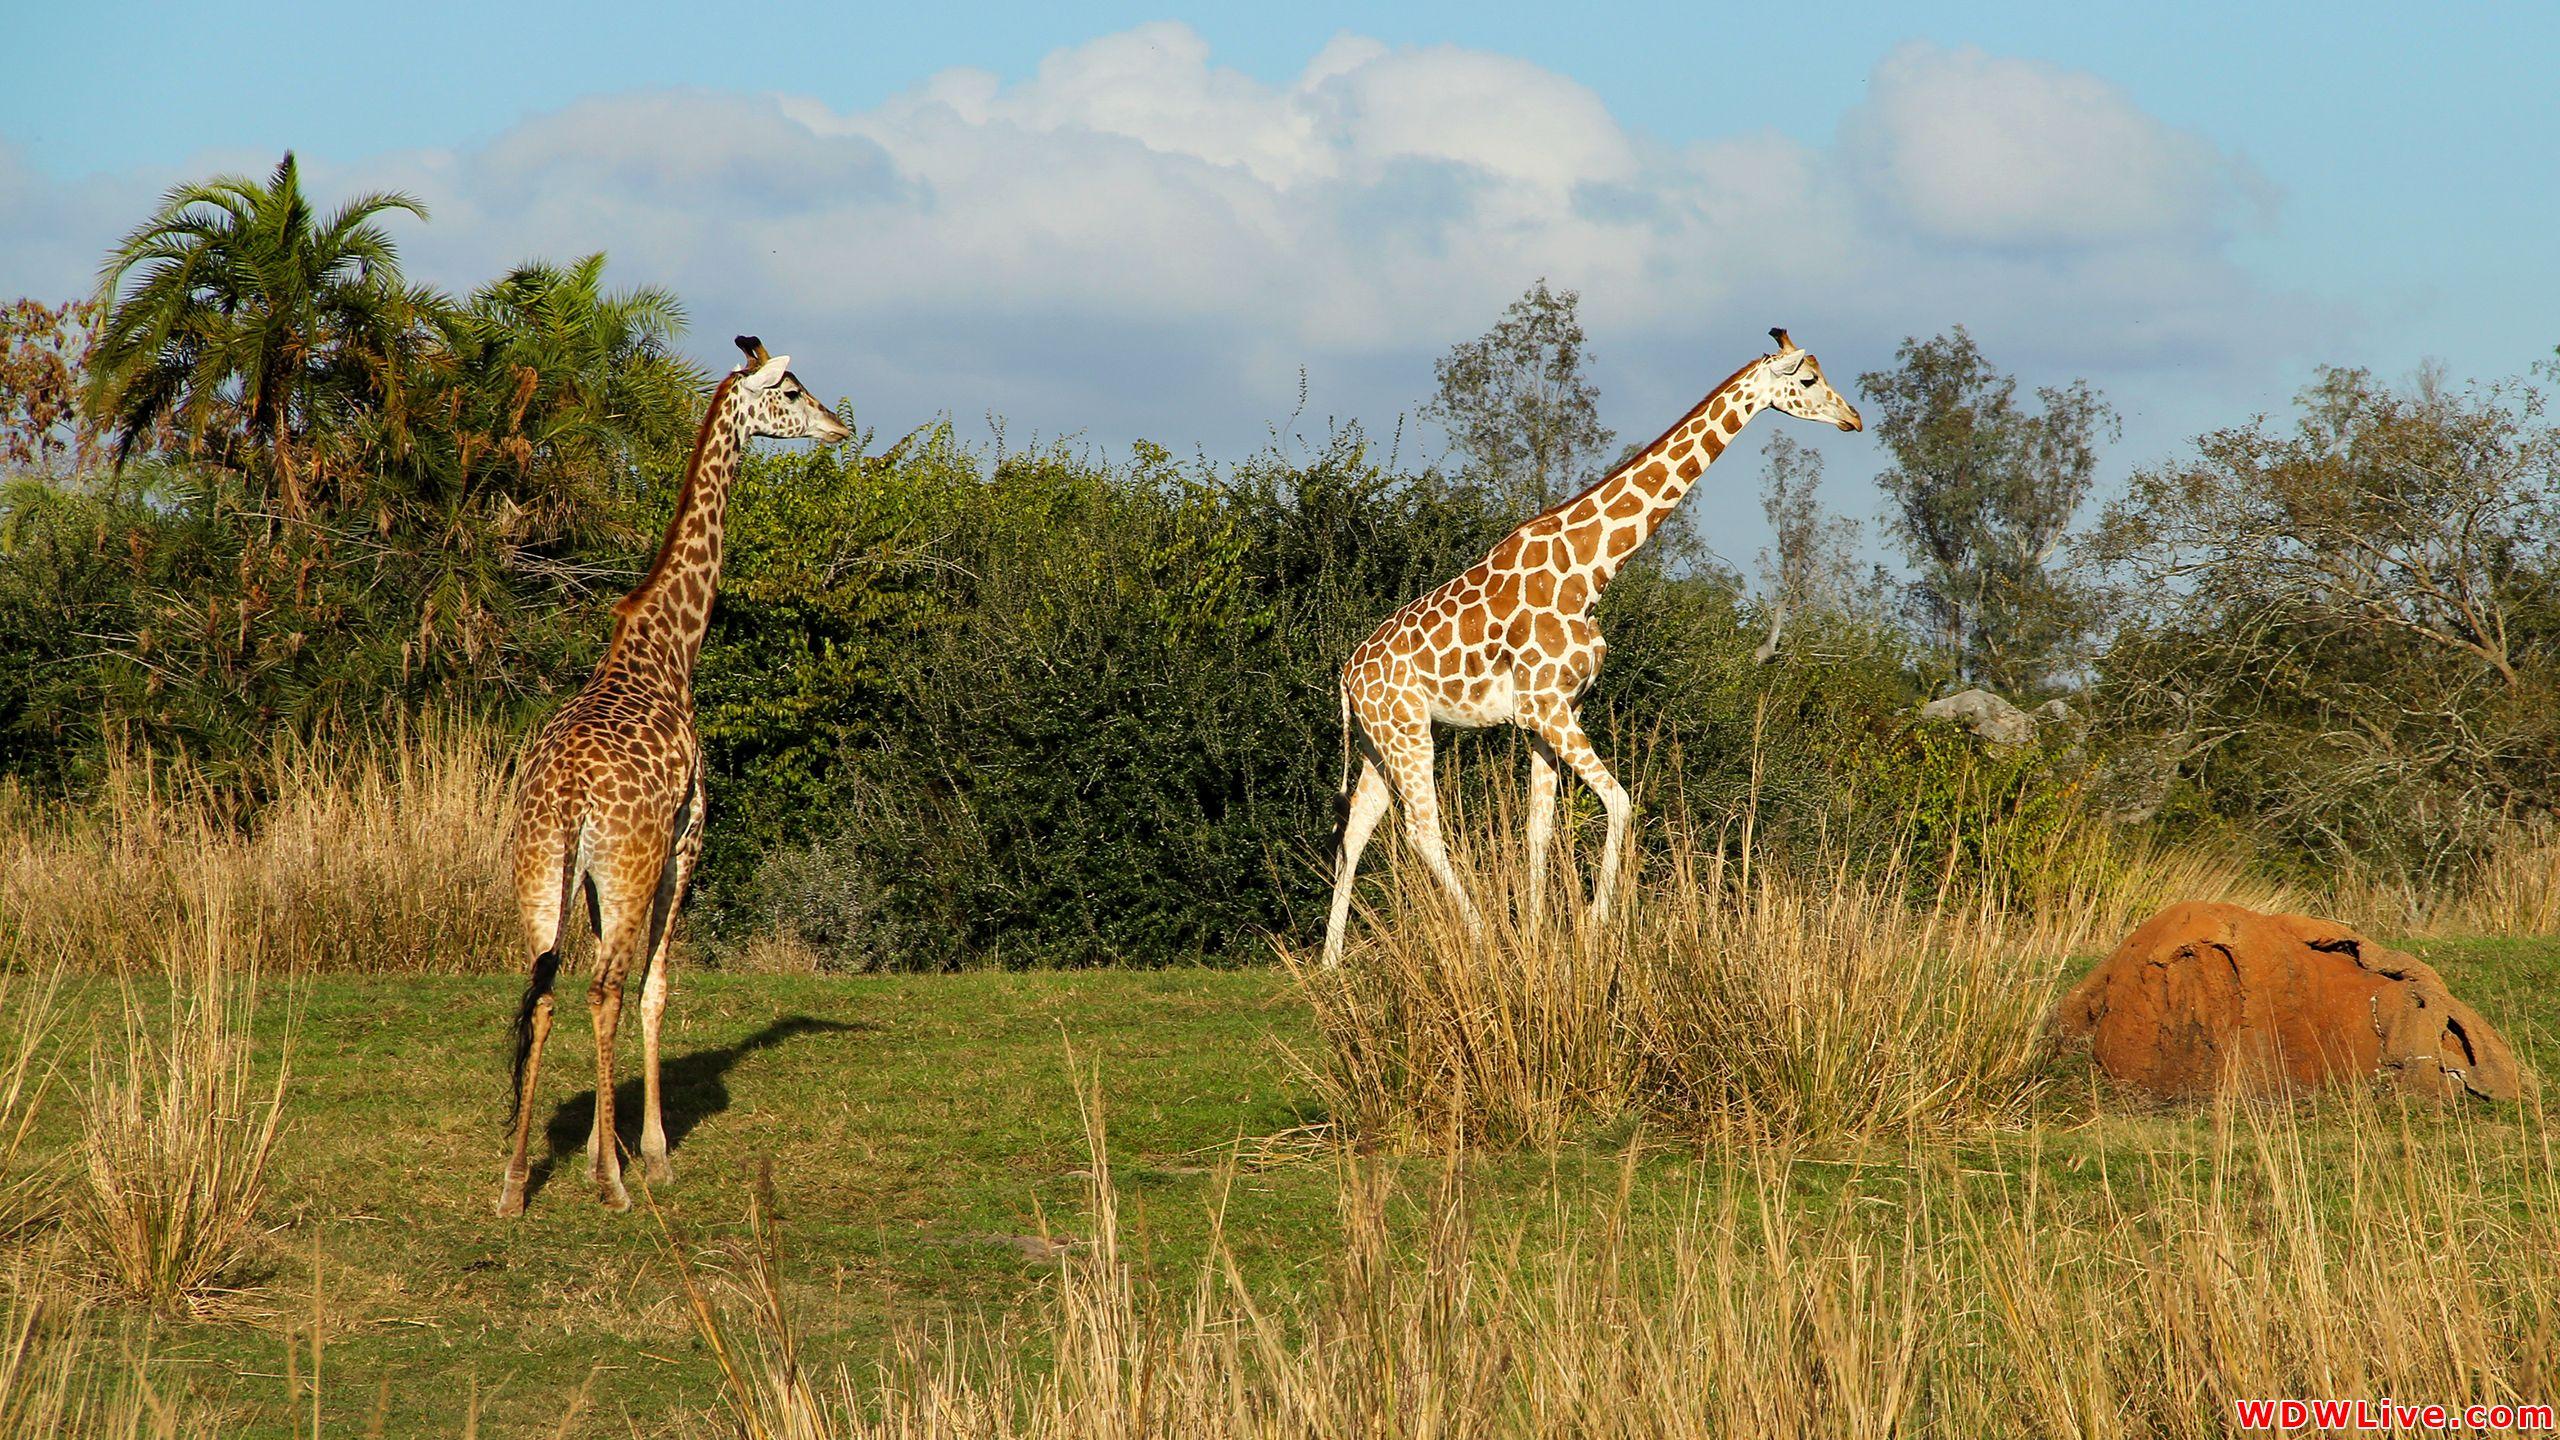 Kilimanjaro Safaris: Two giraffes roam the African savanna of the